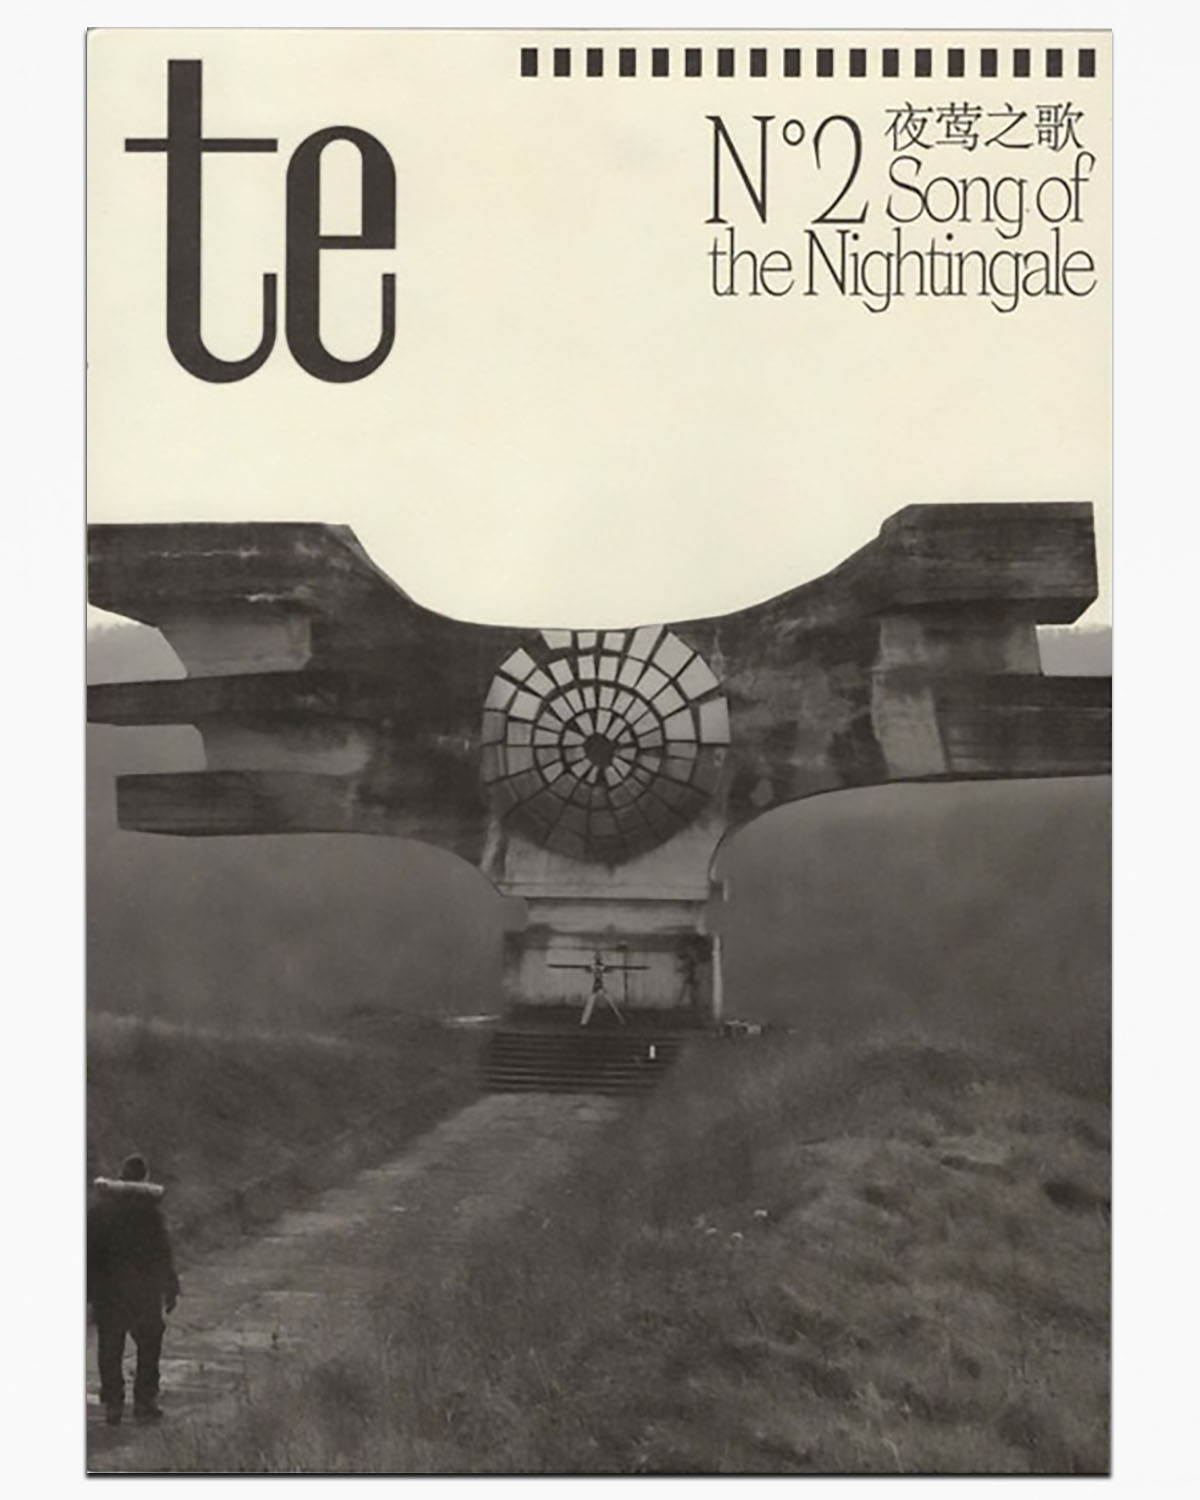 te magazine - No. 2 Song of the Nightingale